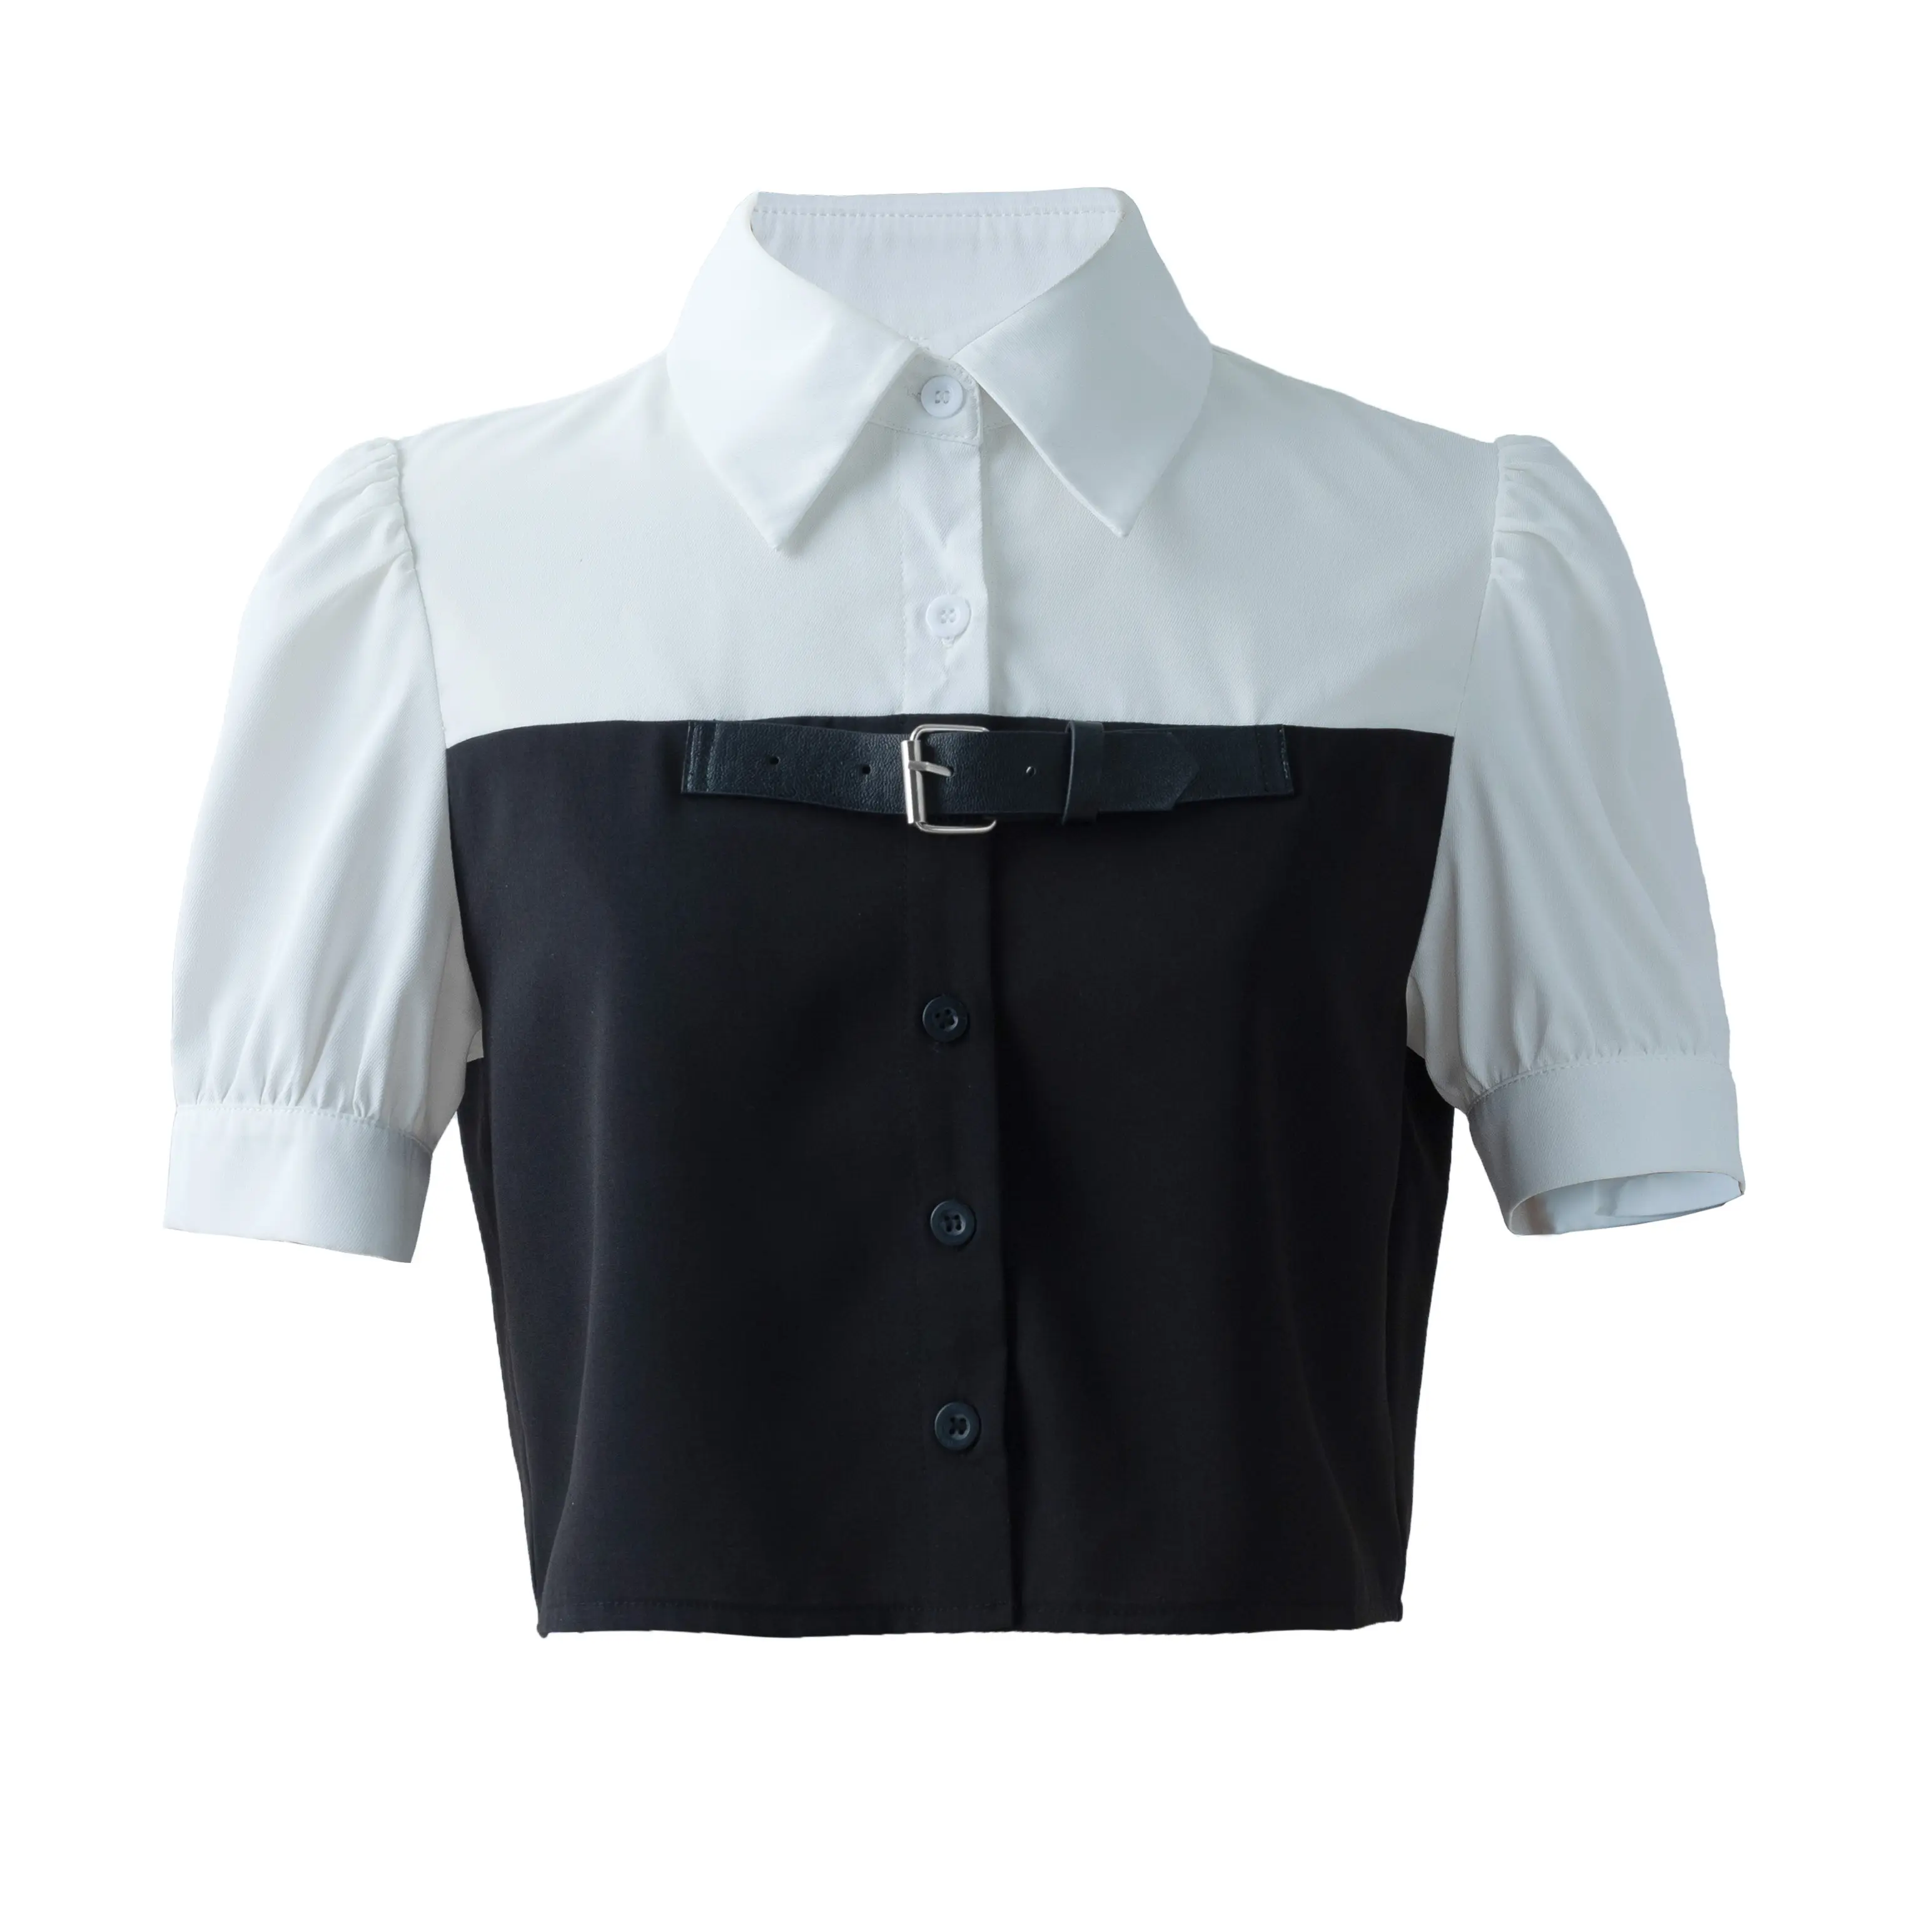 Women's Summer Shirts Trendy Casual Black White Patchwork Shirt Tops Short Sleeve Skin Friendly